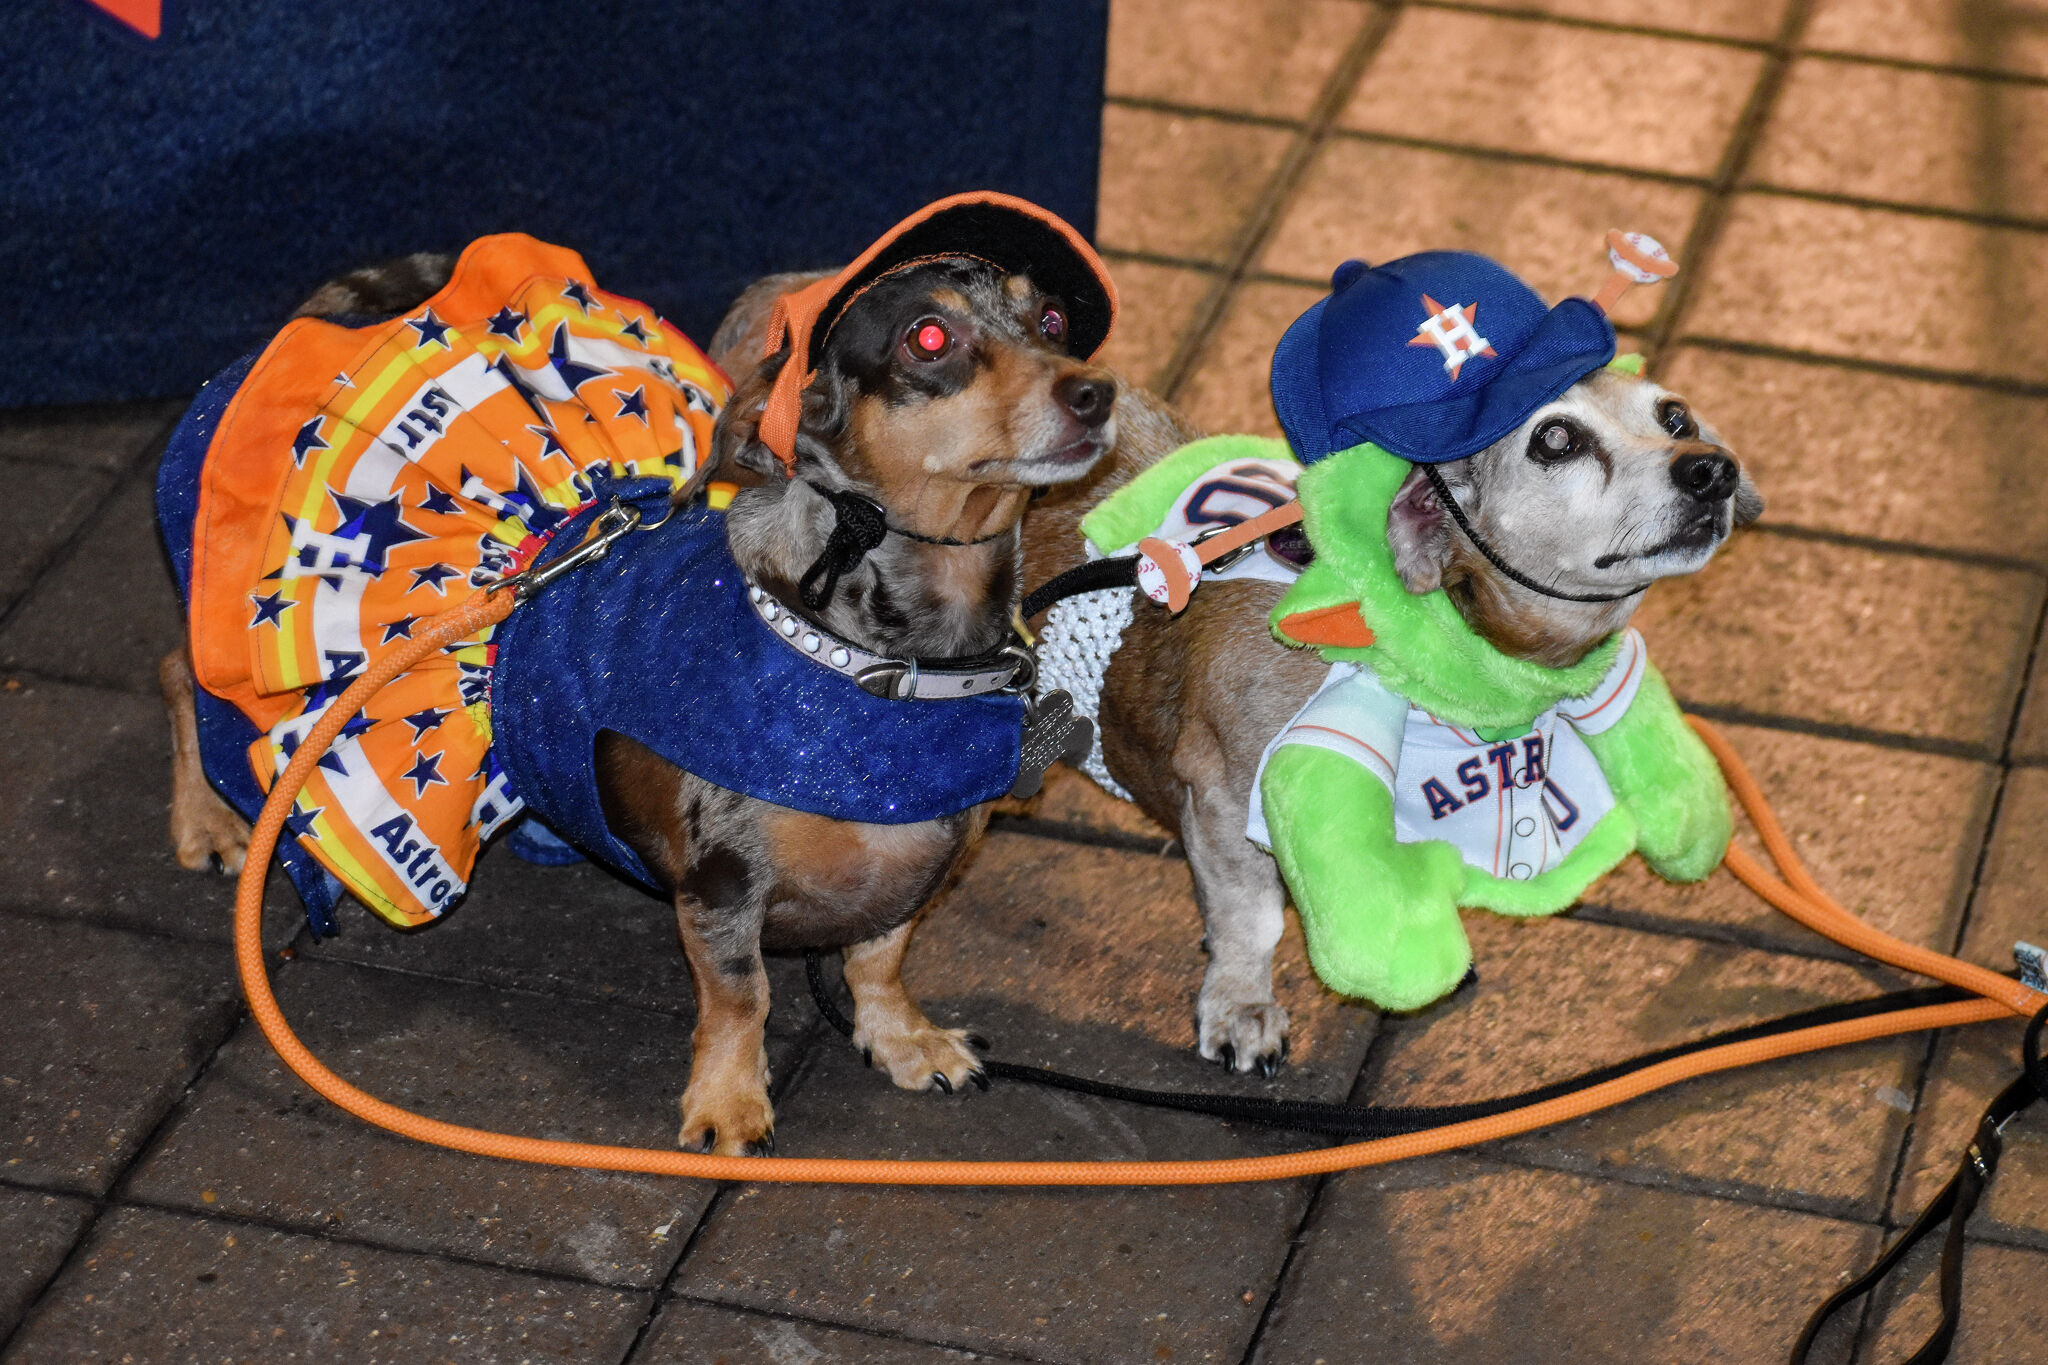 DOG DAY 2019. 12/10 good day. Baseball Doggos…, by Houston Astros